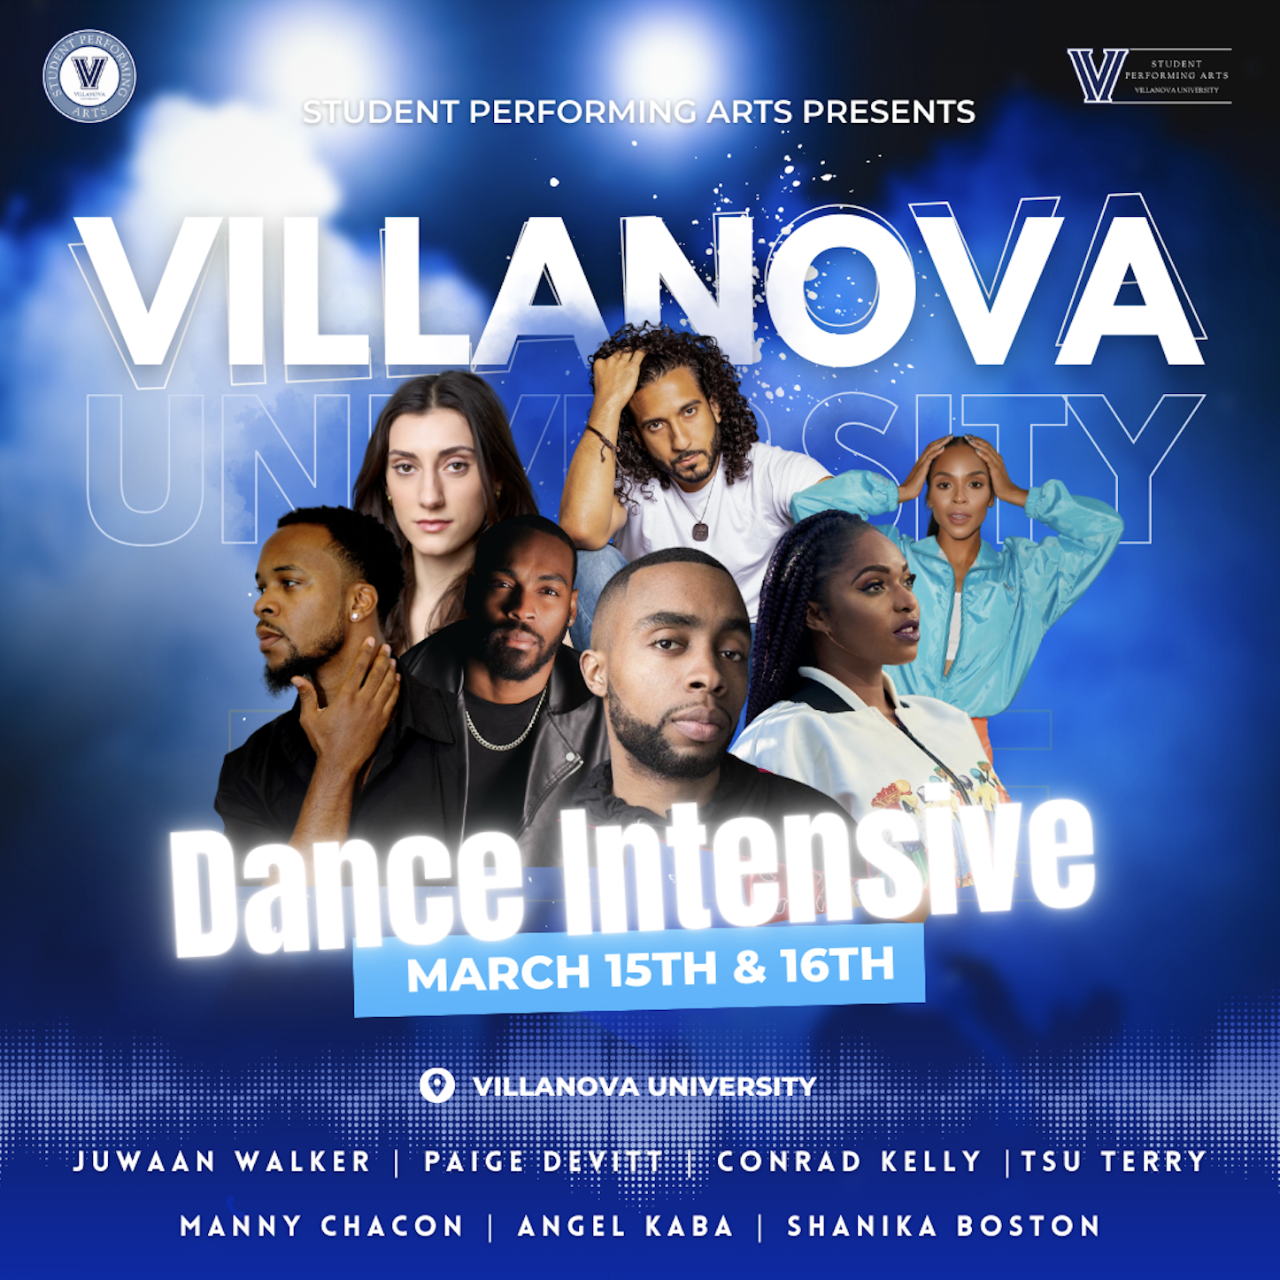 images of 7 dance instructors for Villanova dance intensive on 3/15 & 3/16